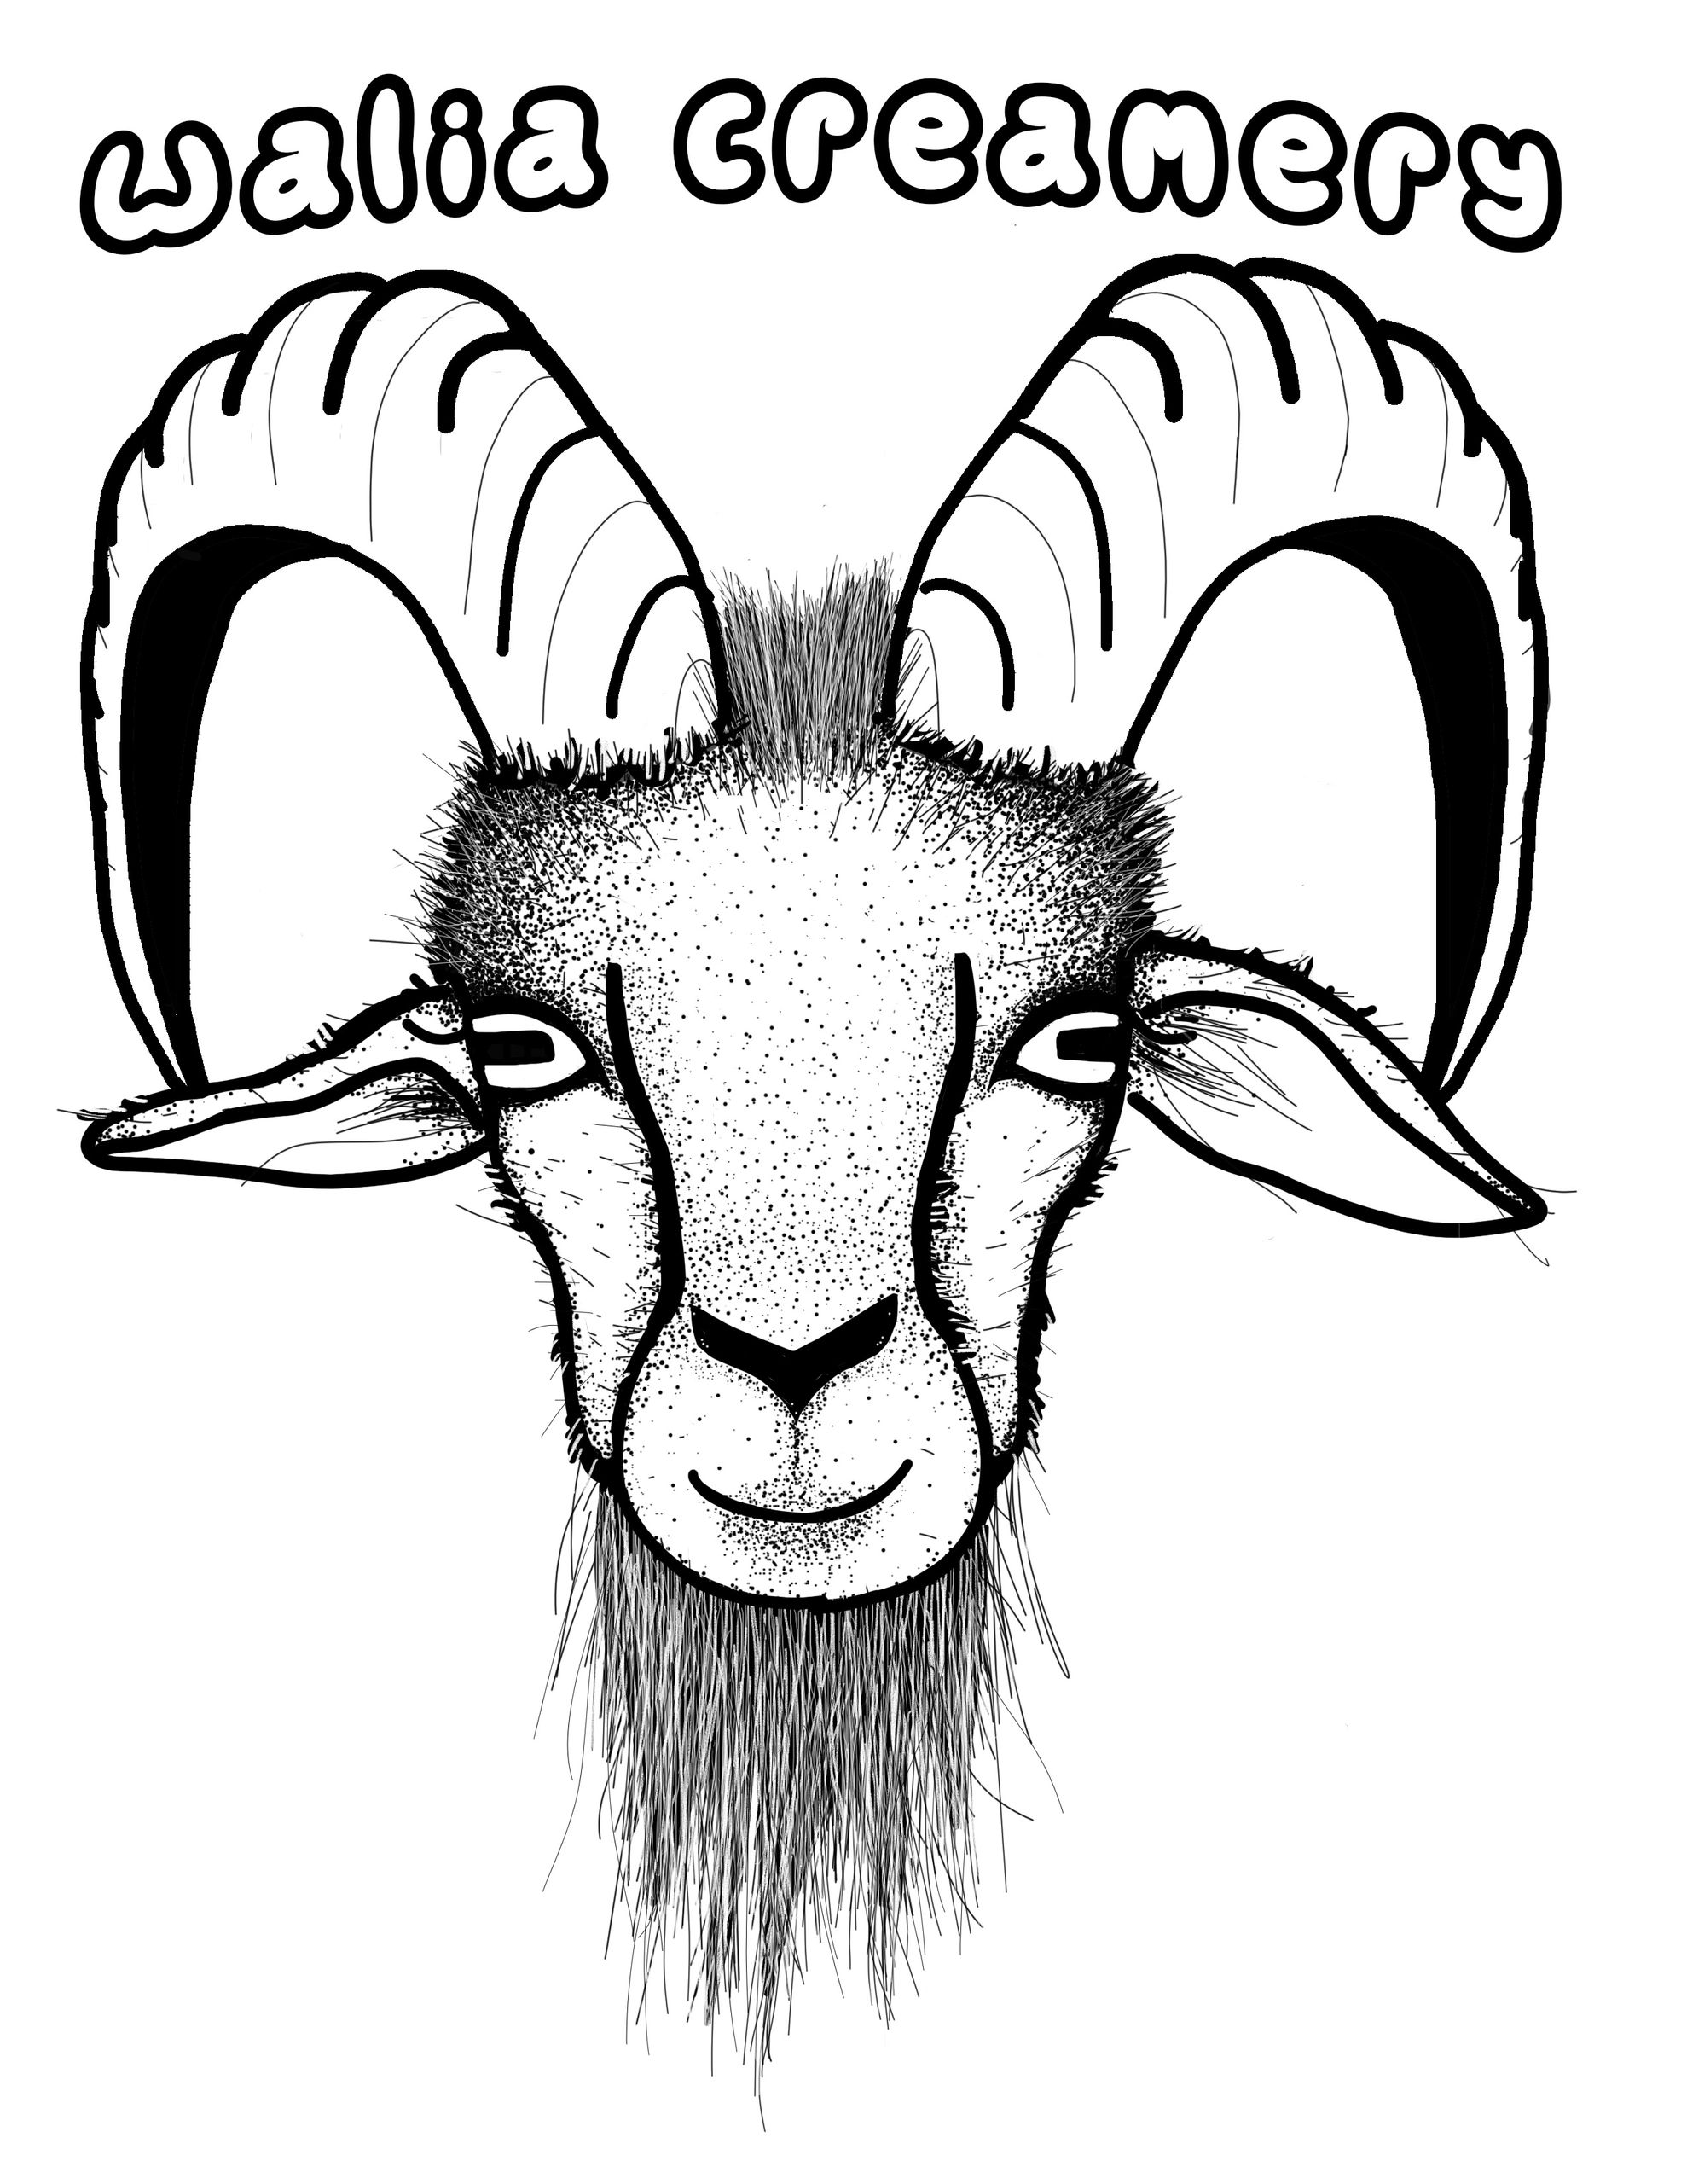 Black and white cartoon walia ibex head with bubble letters that read "Walia Creamery"